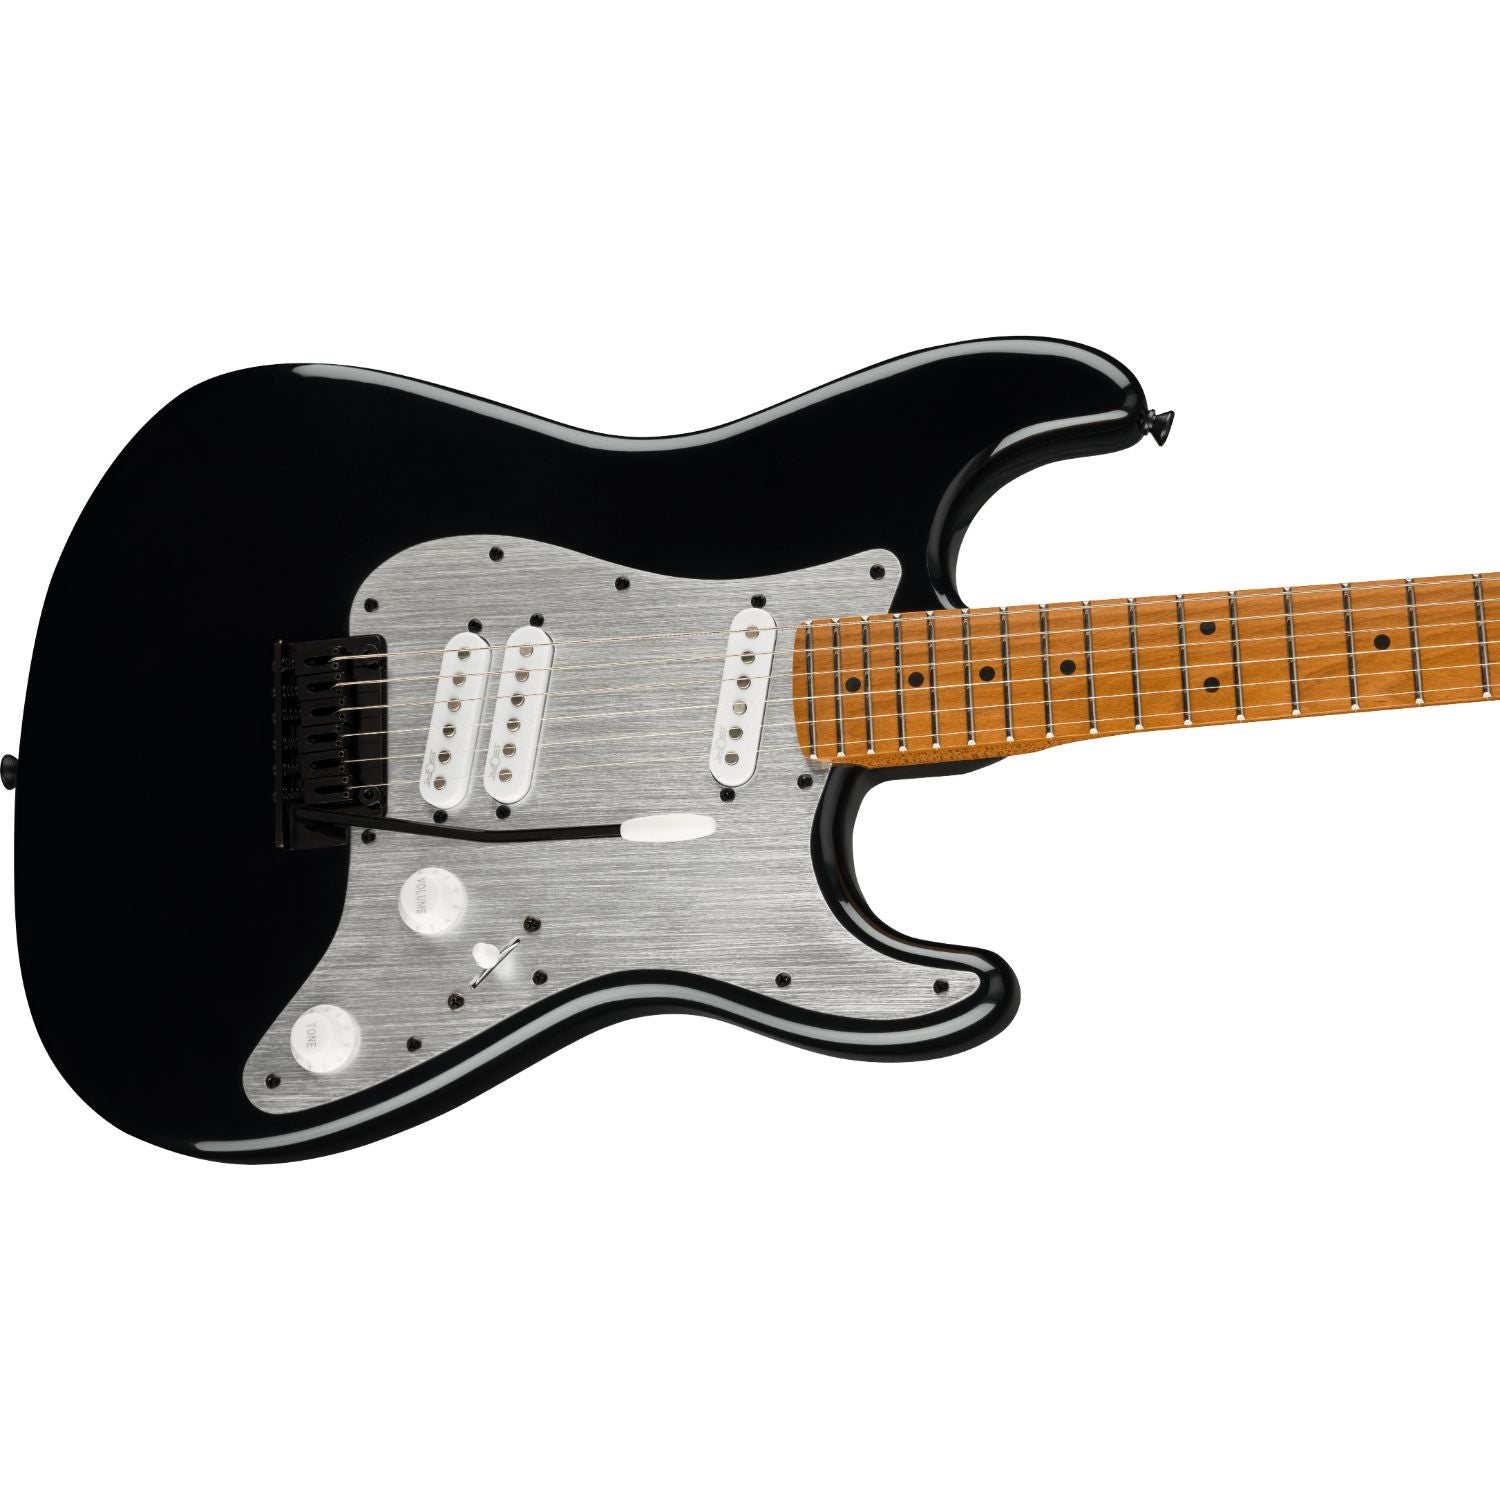 Squier Contemporary Stratocaster Special, Black